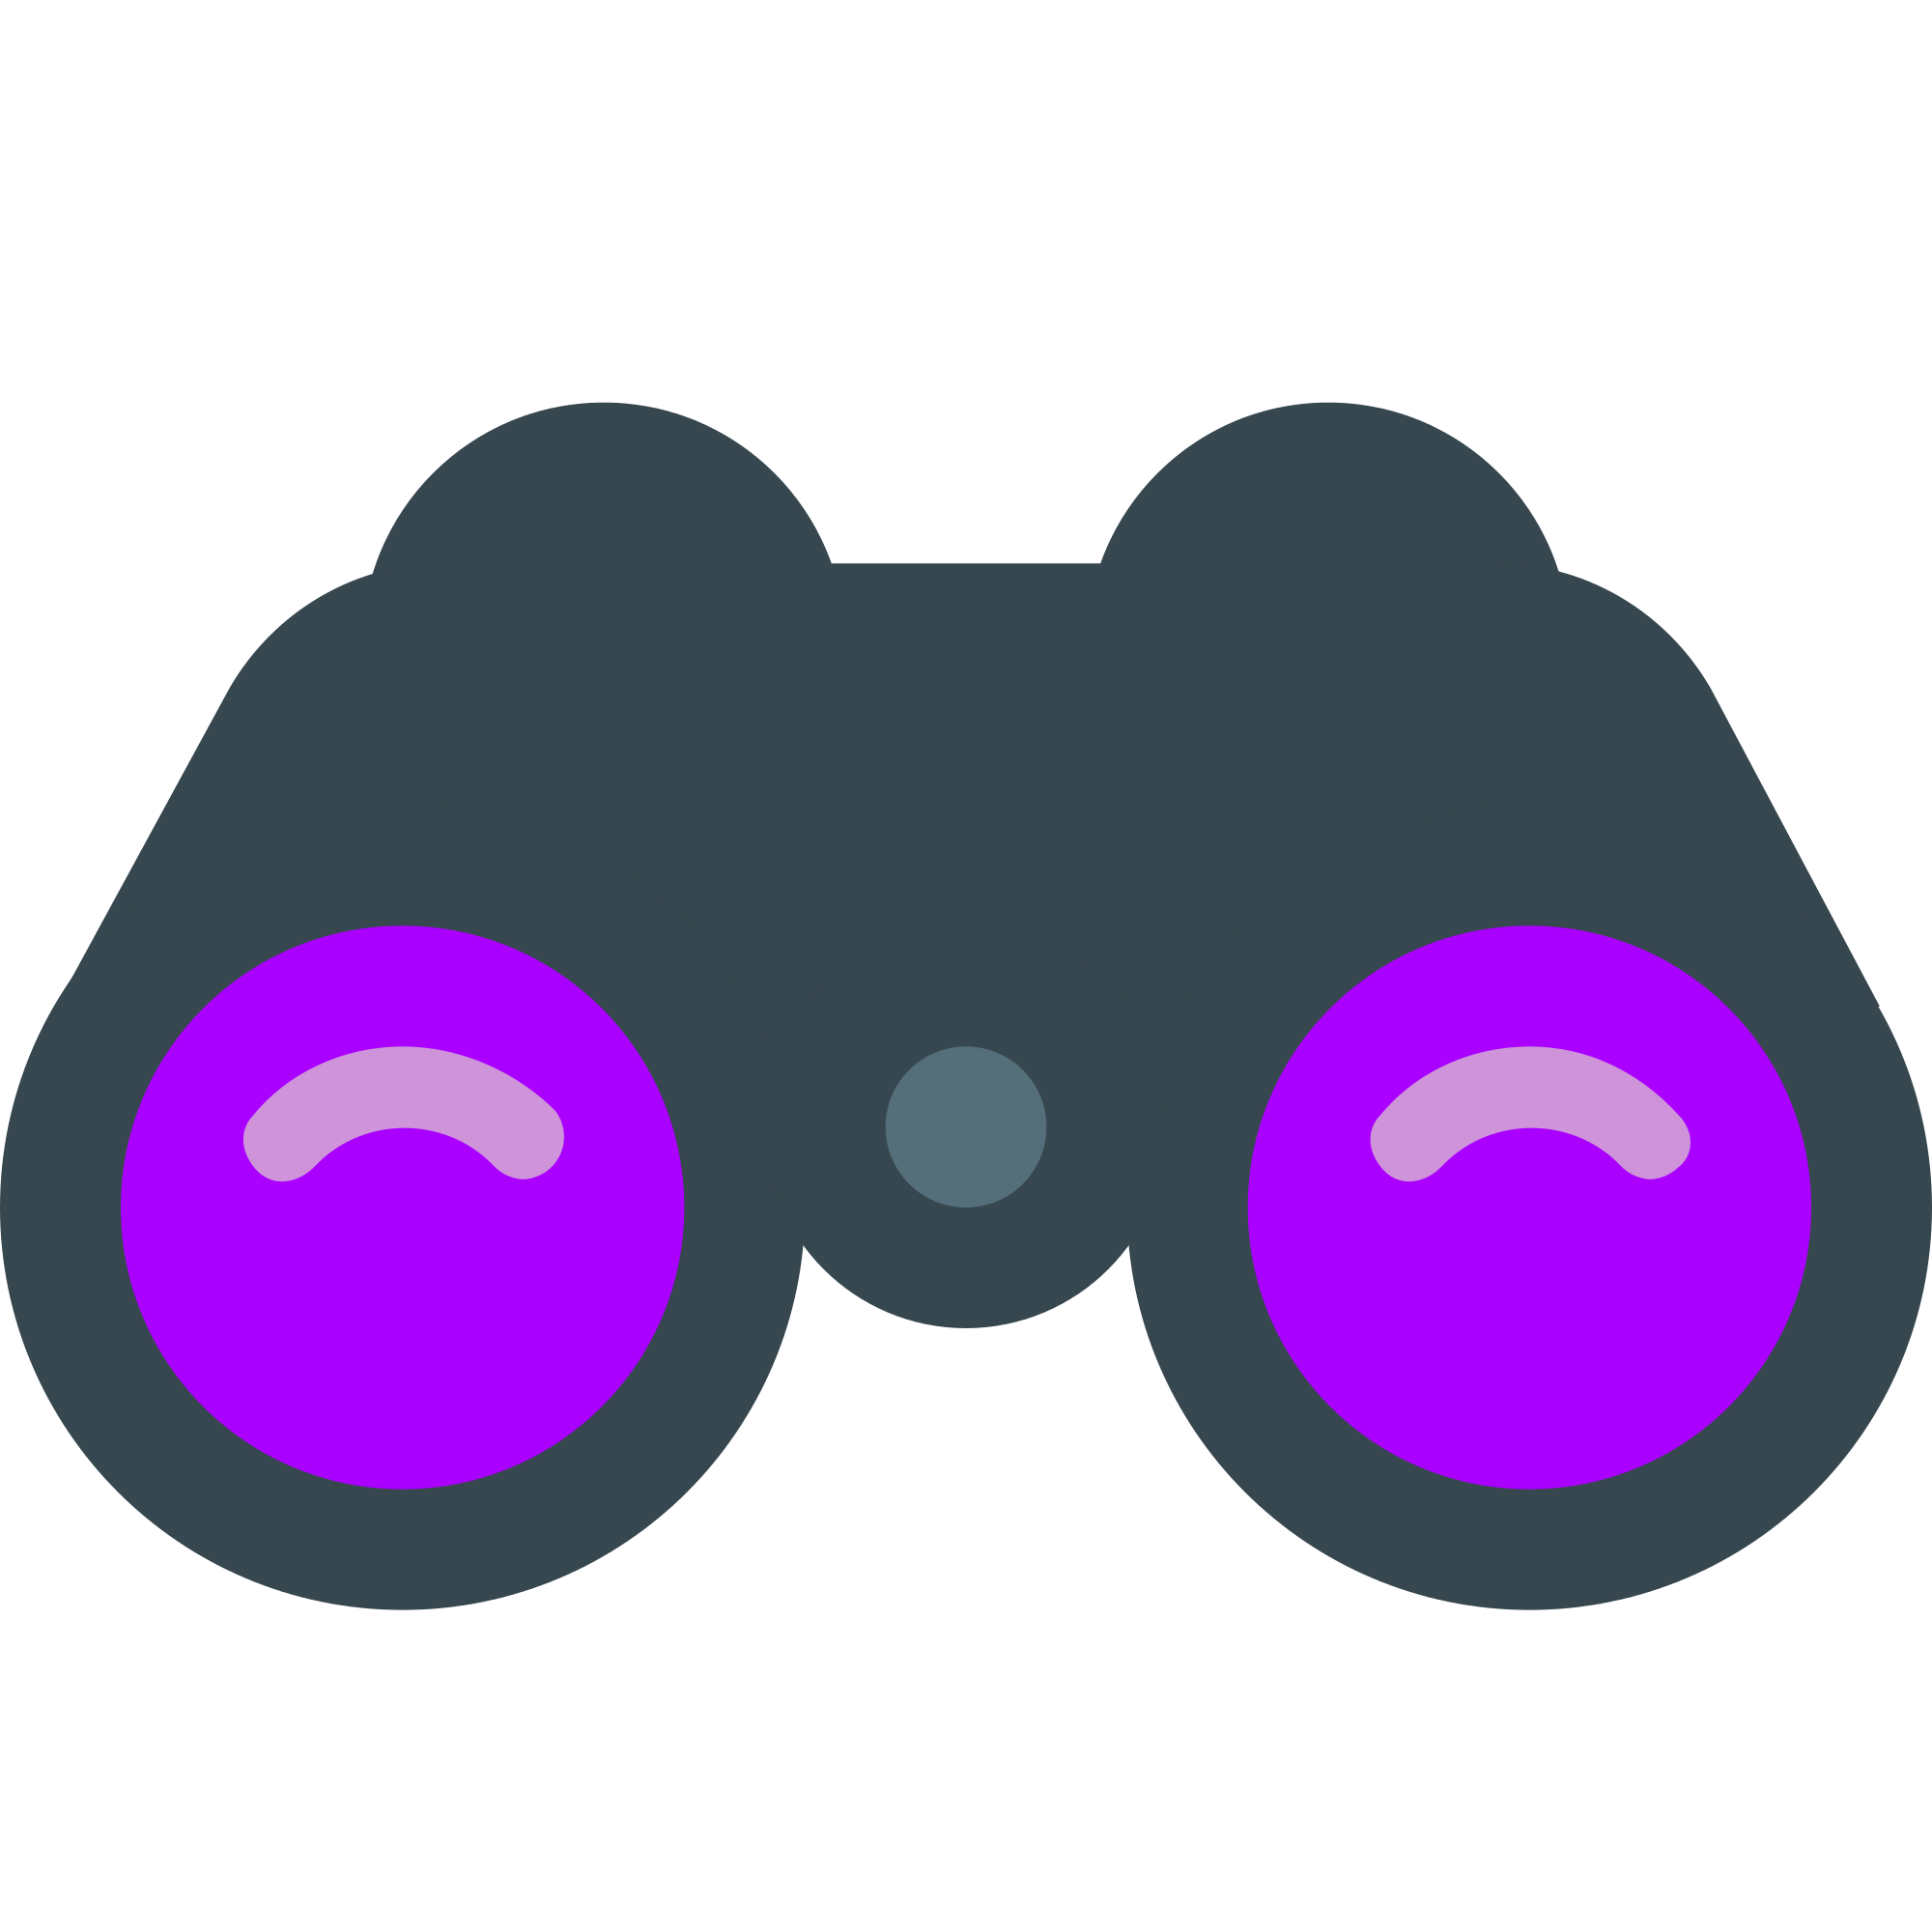 binoculars clipart purple